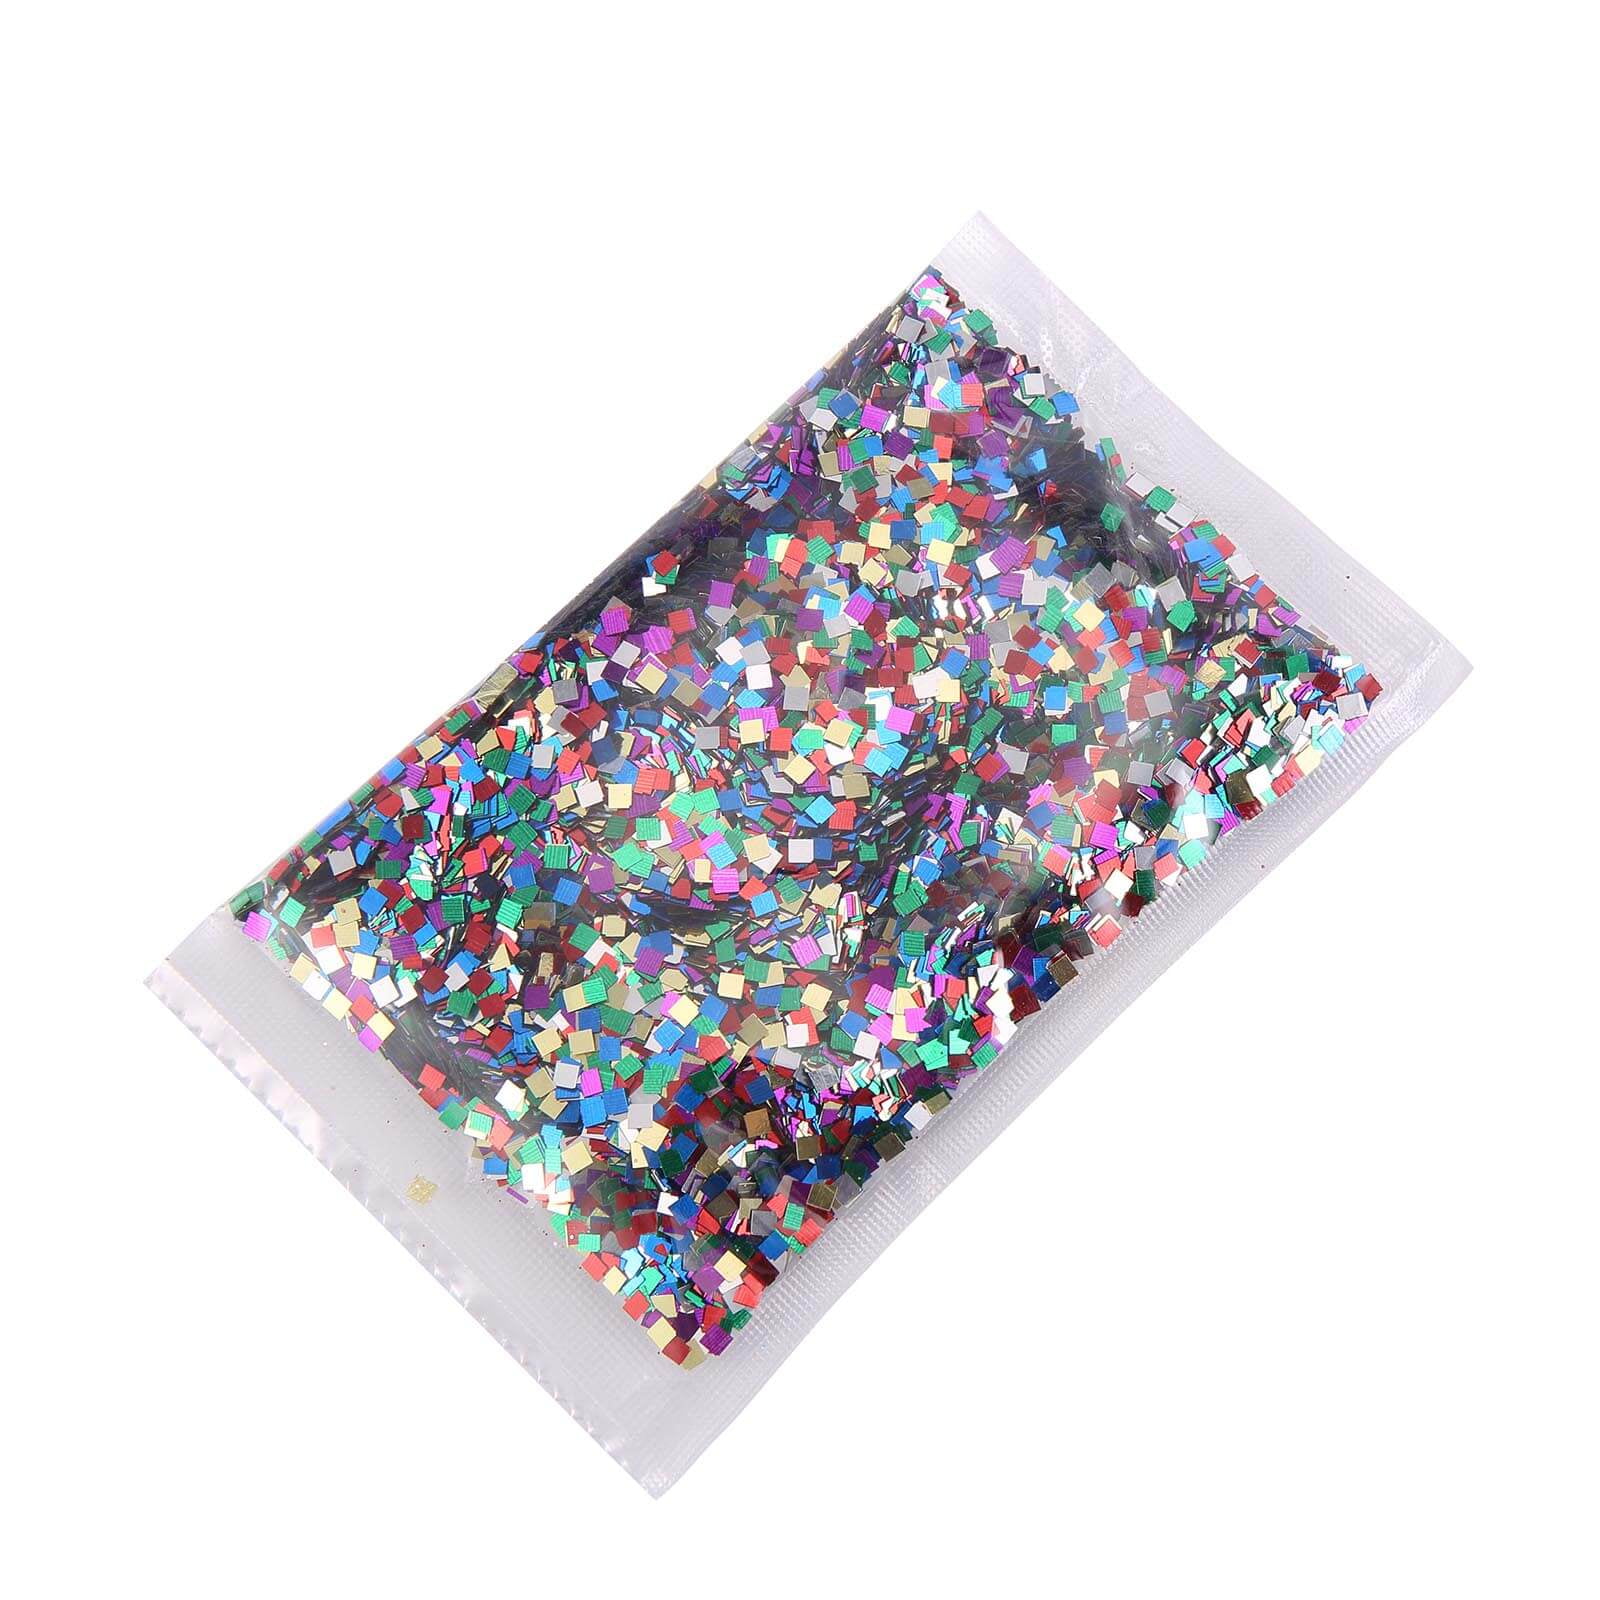 Efavormart 50 grams Assorted DIY Art & Craft Confetti Glitters Chunky ...